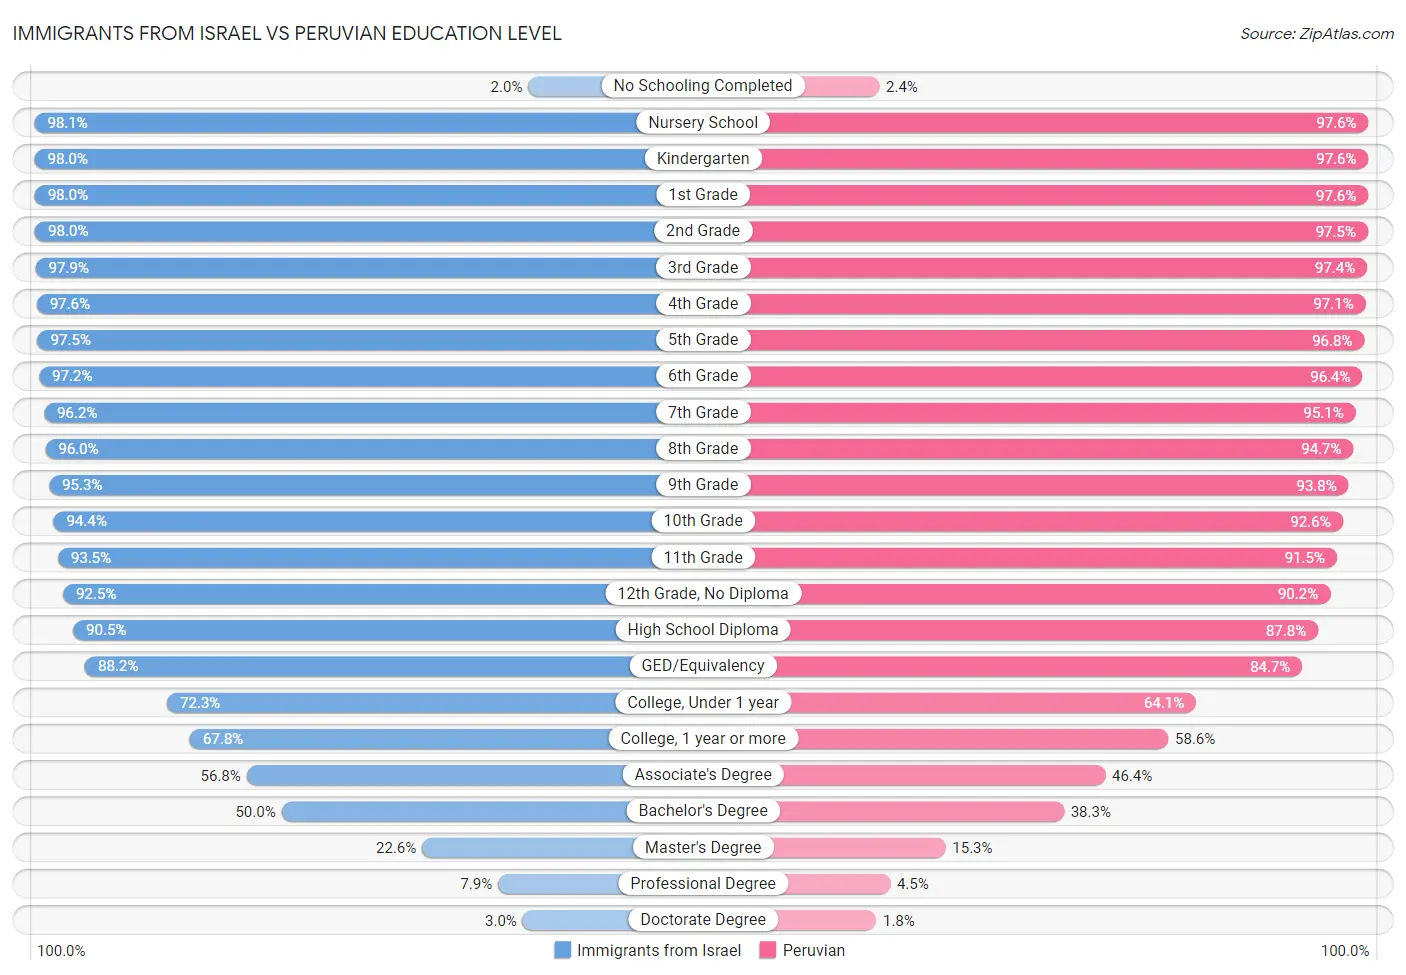 Immigrants from Israel vs Peruvian Education Level